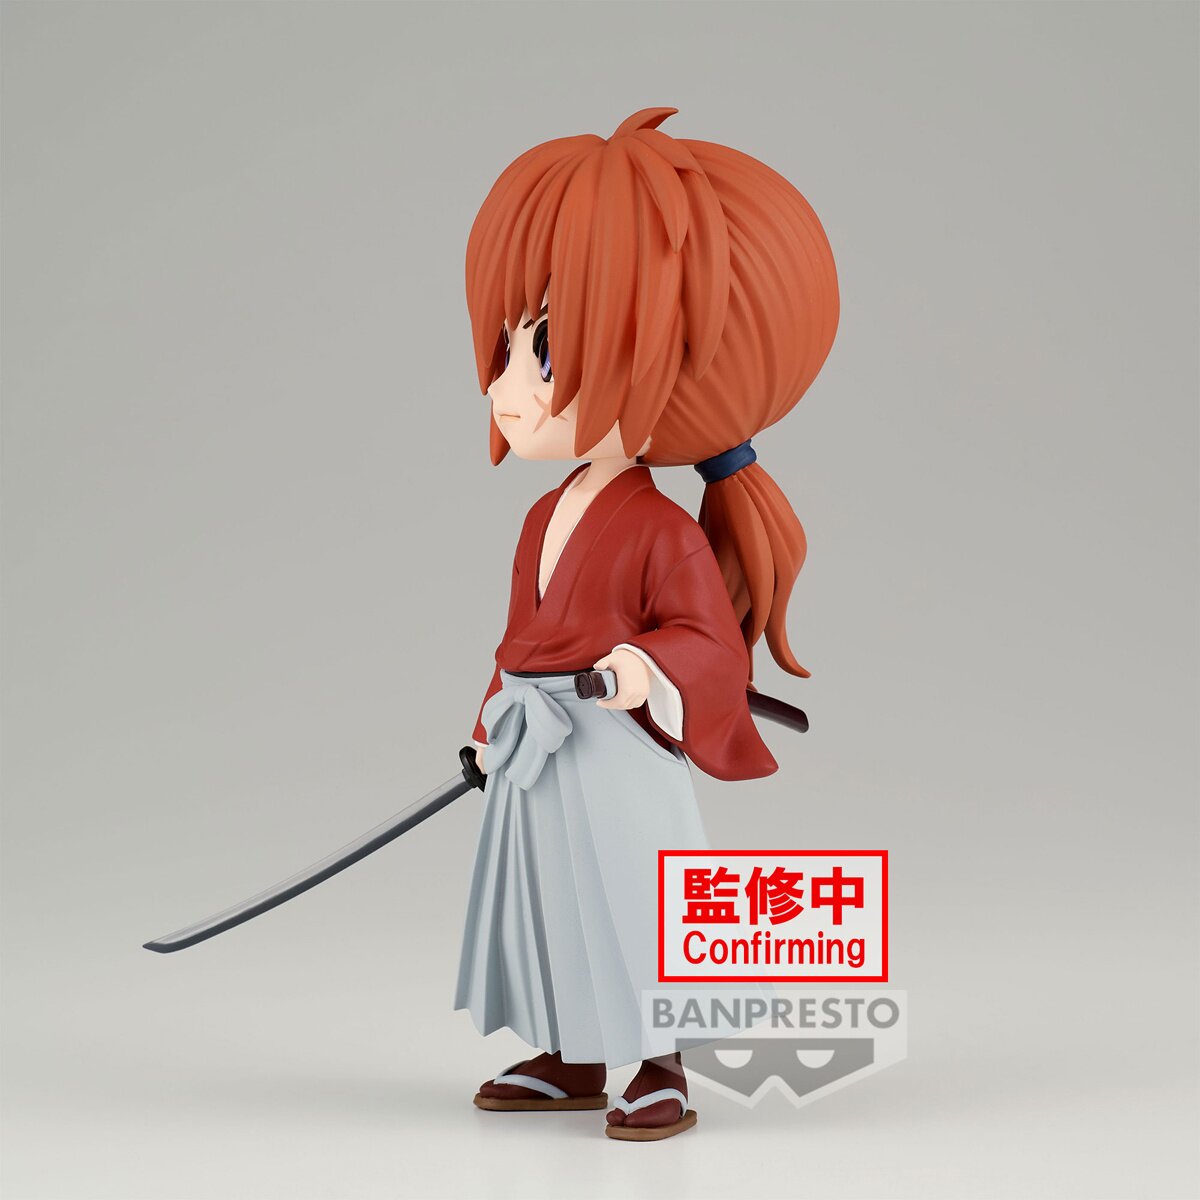 Nendoroid Kenshin Himura,Figures,Nendoroid,Nendoroid Figures,Rurouni Kenshin